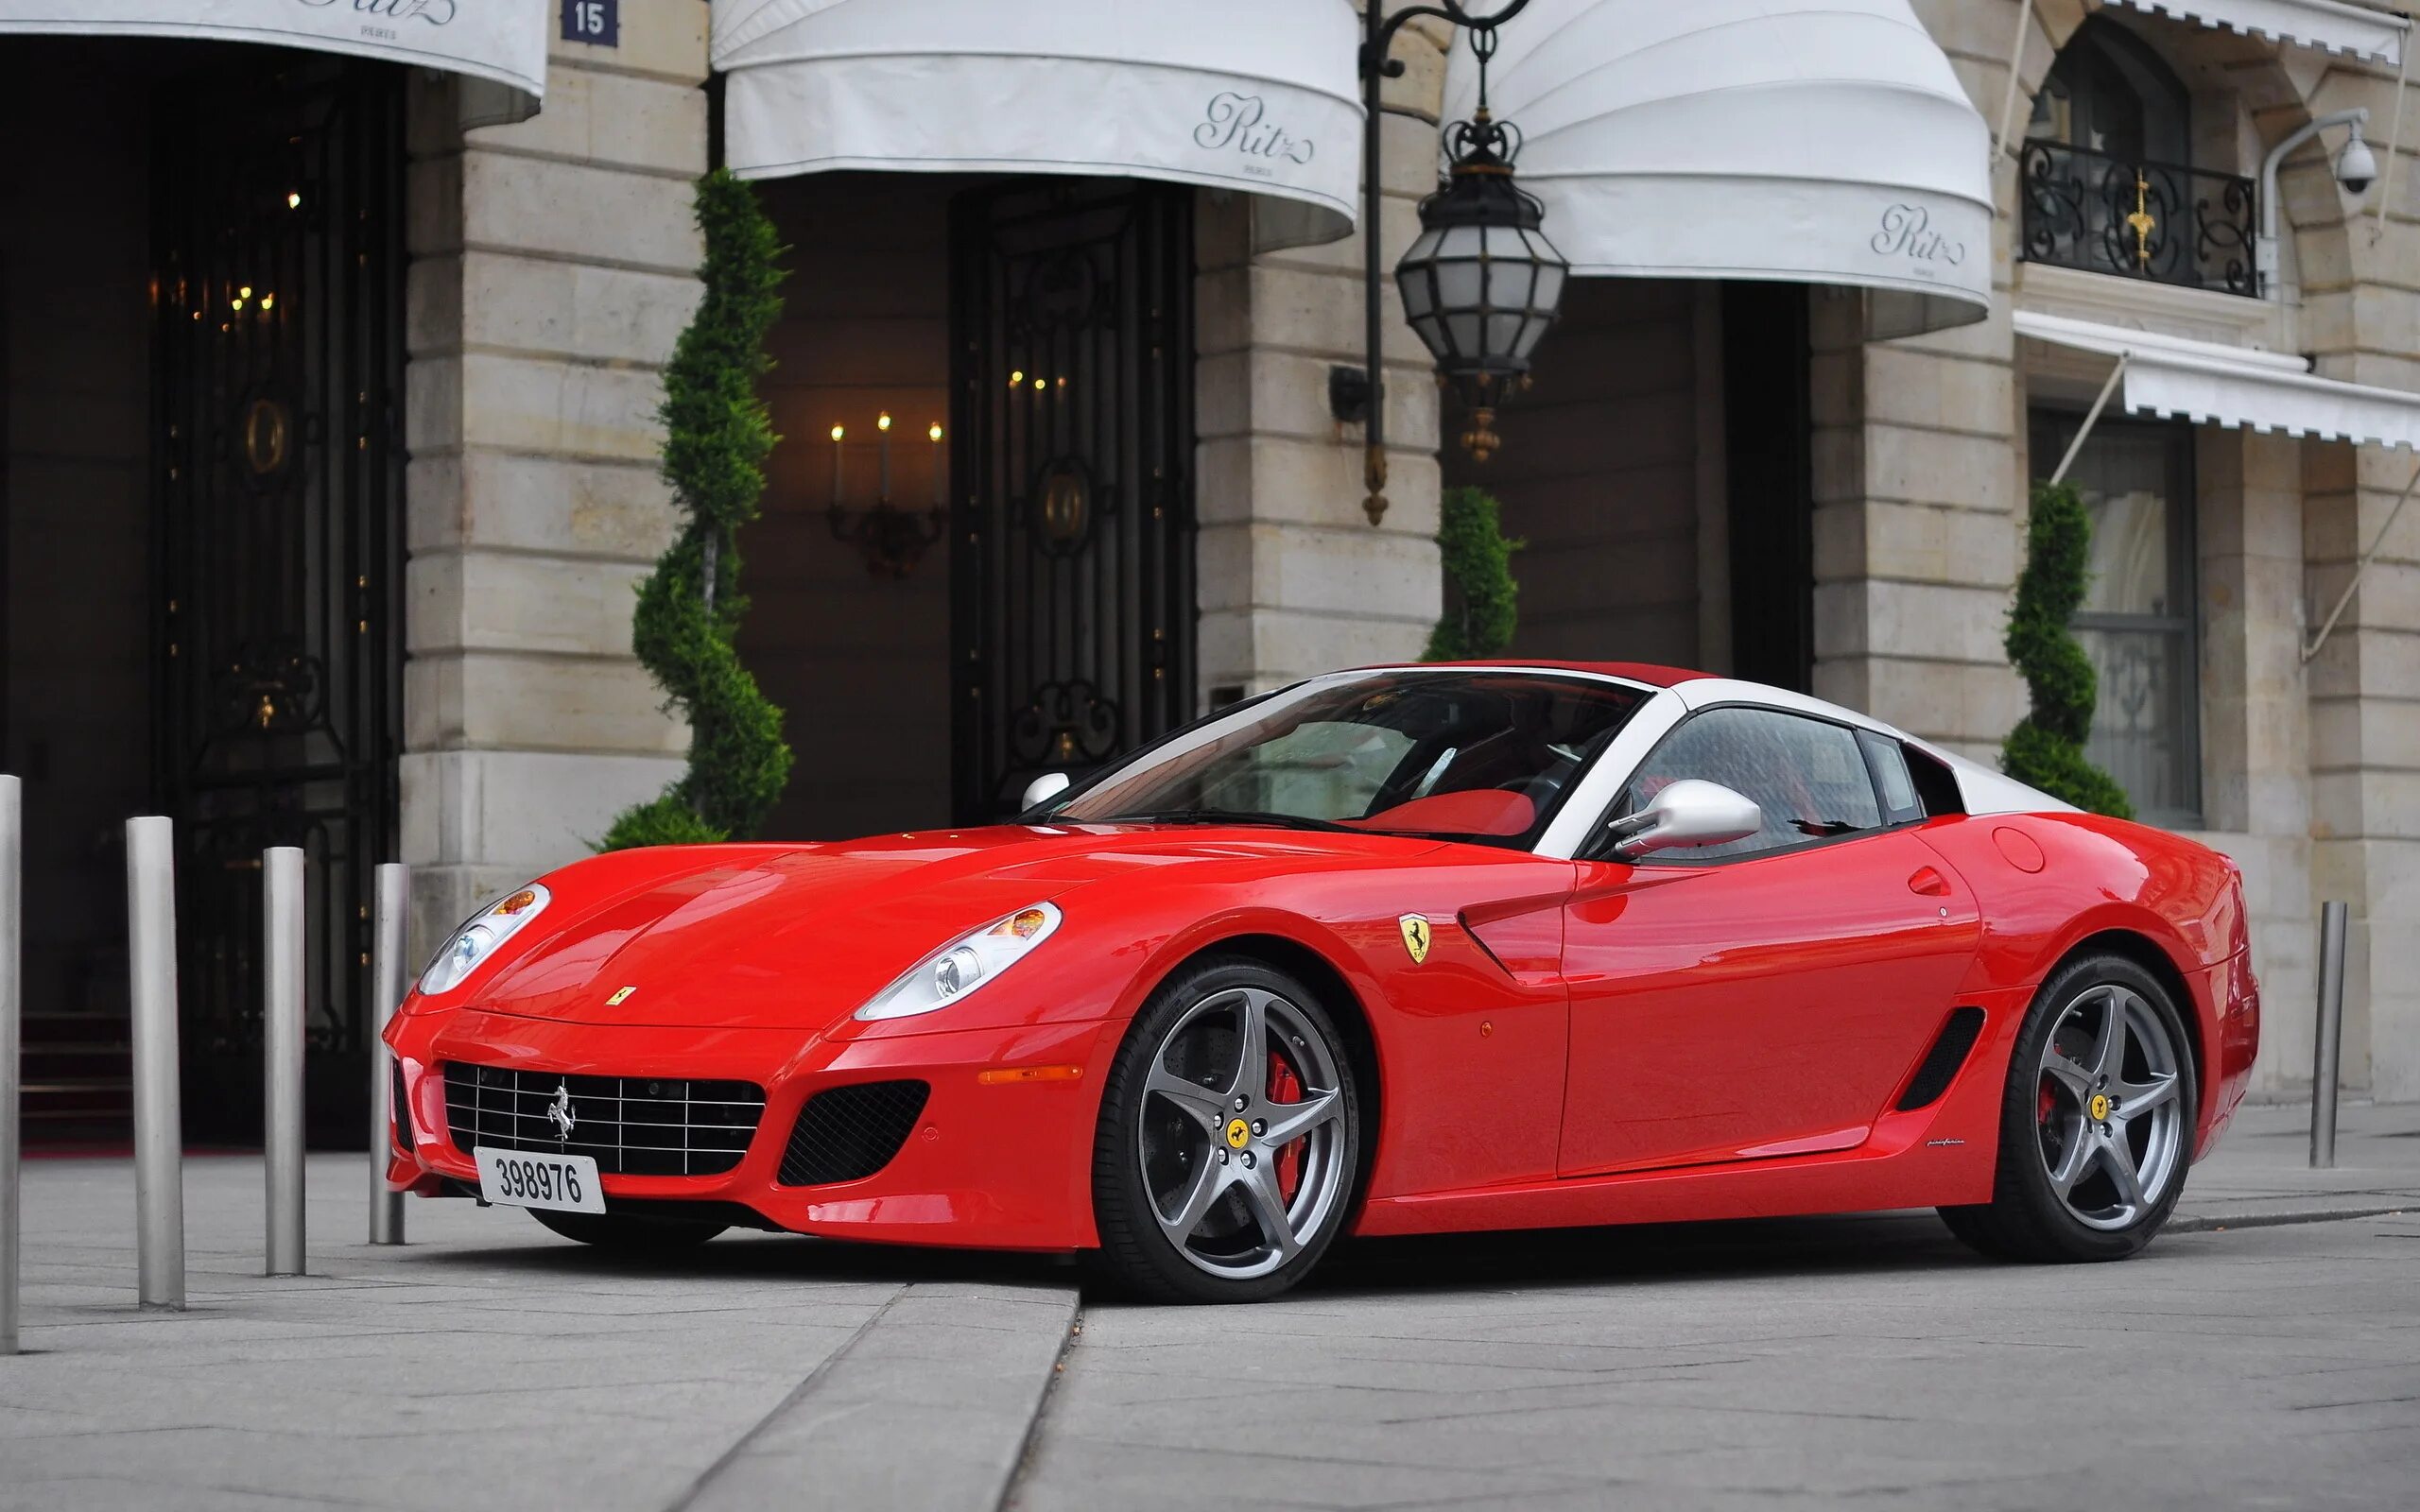 Феррари ferrari. Ferrari 599 GTO. Ferrari 599 Sport. Феррари 599 sa aperta. Красная Феррари.